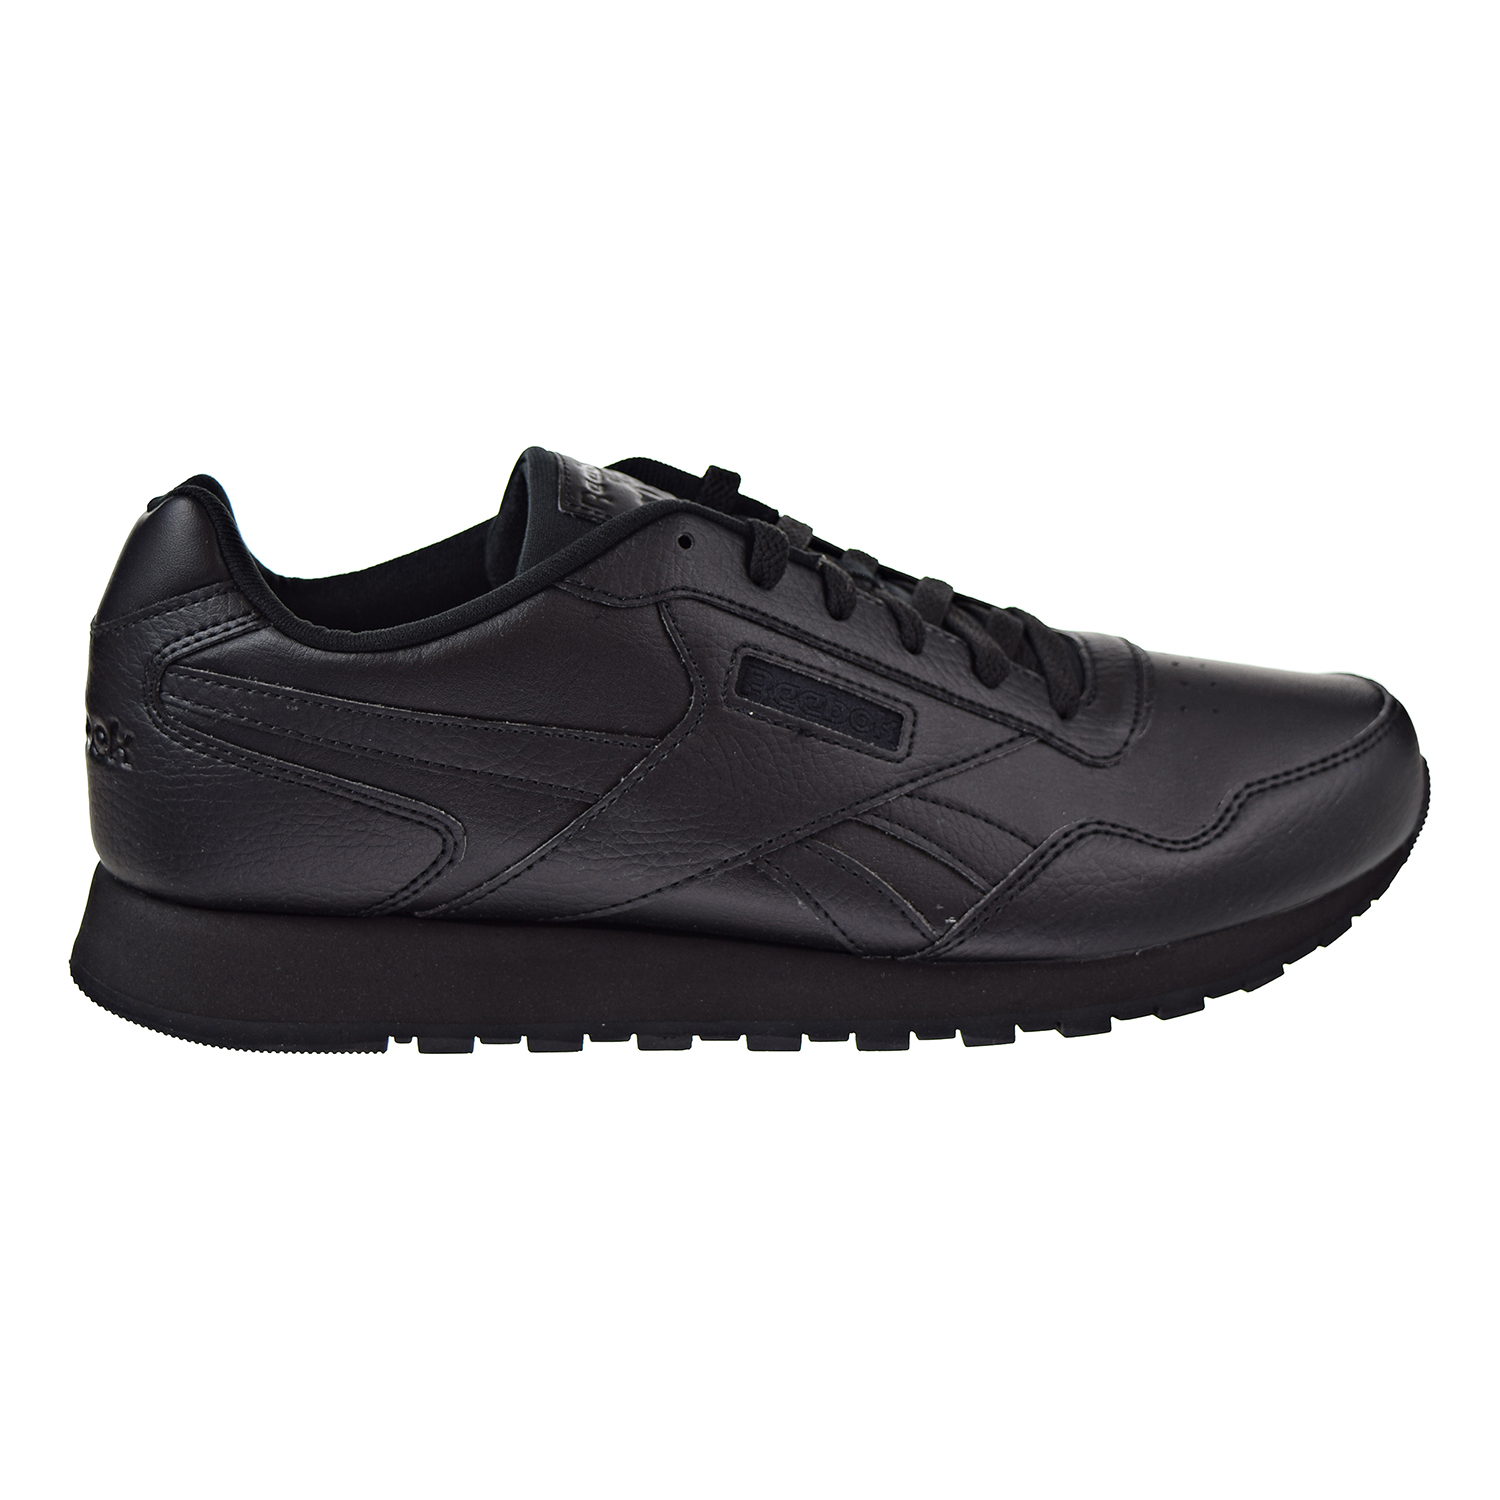 Reebok Classic Harman Run Men's Shoes Black cn0192 (9.5 D(M) US)